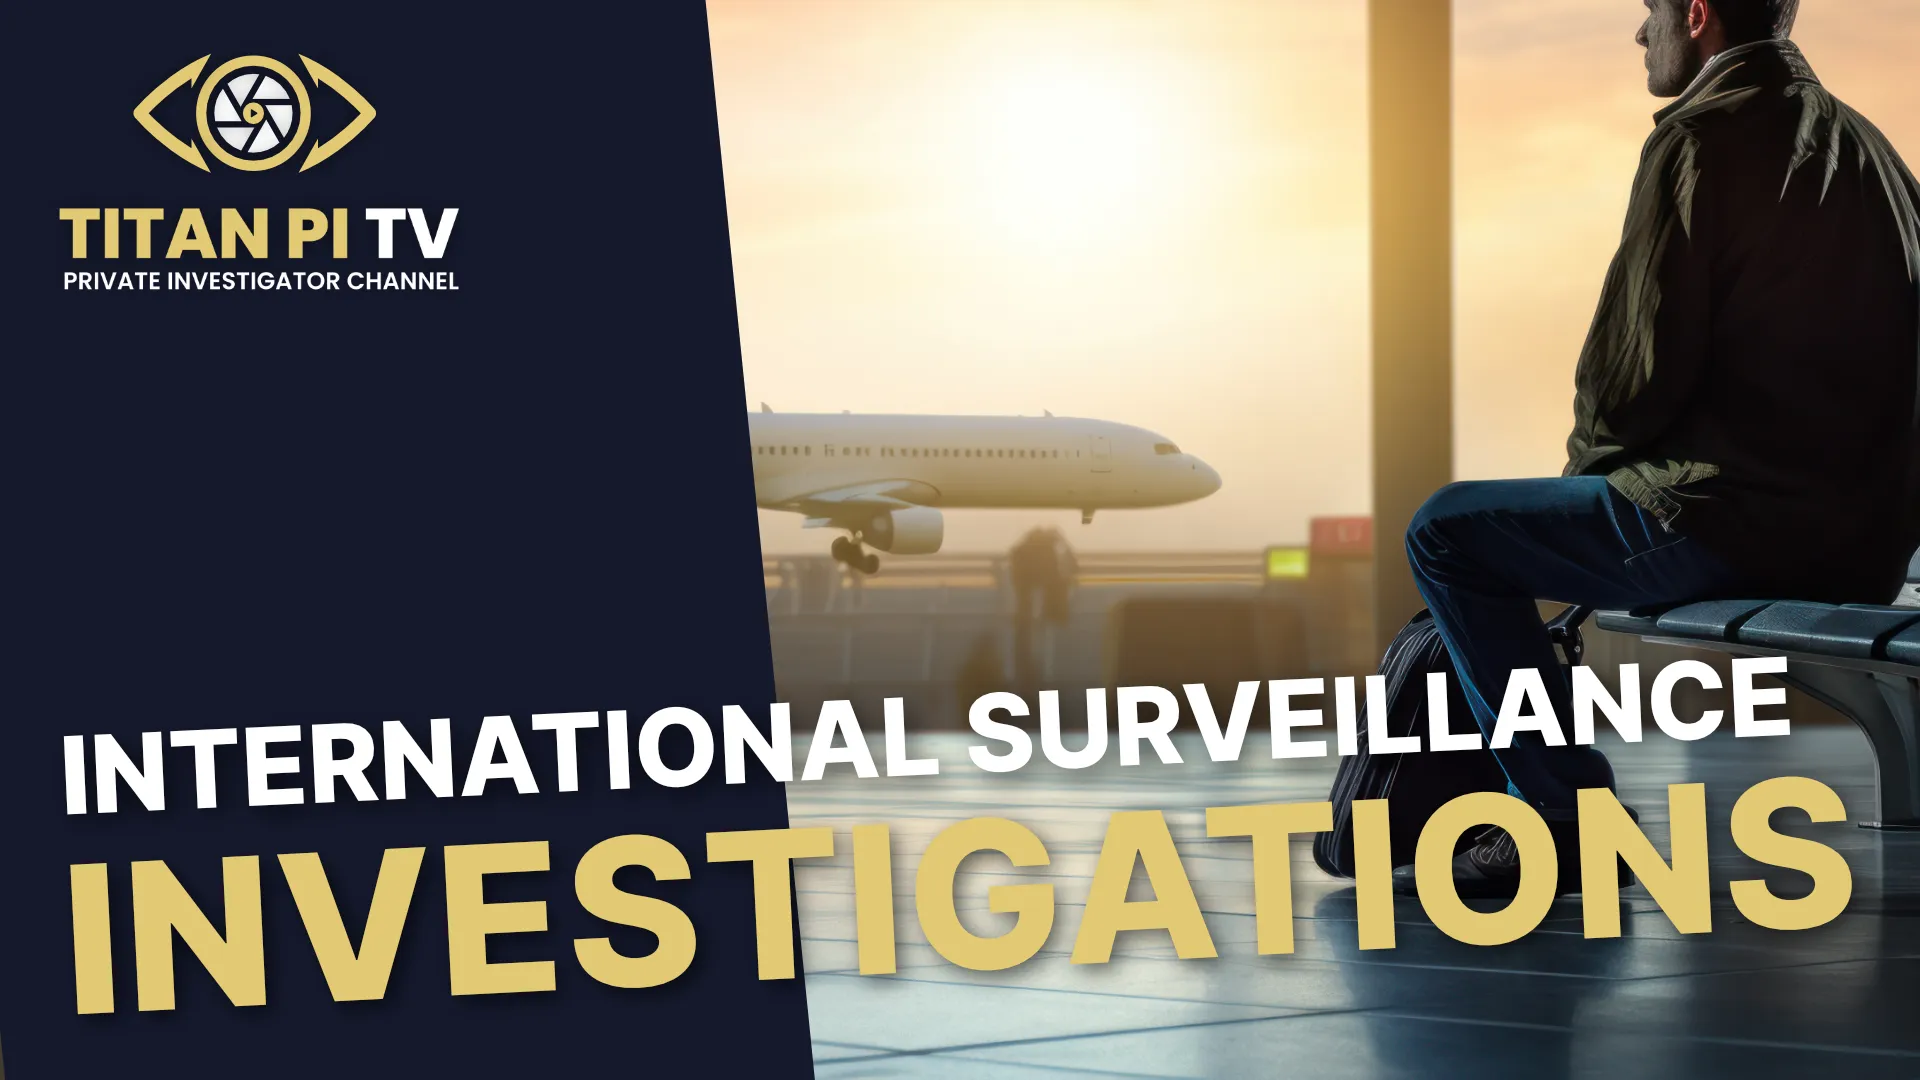 International Surveillance Investigations Episode 46 | Titan PI TV